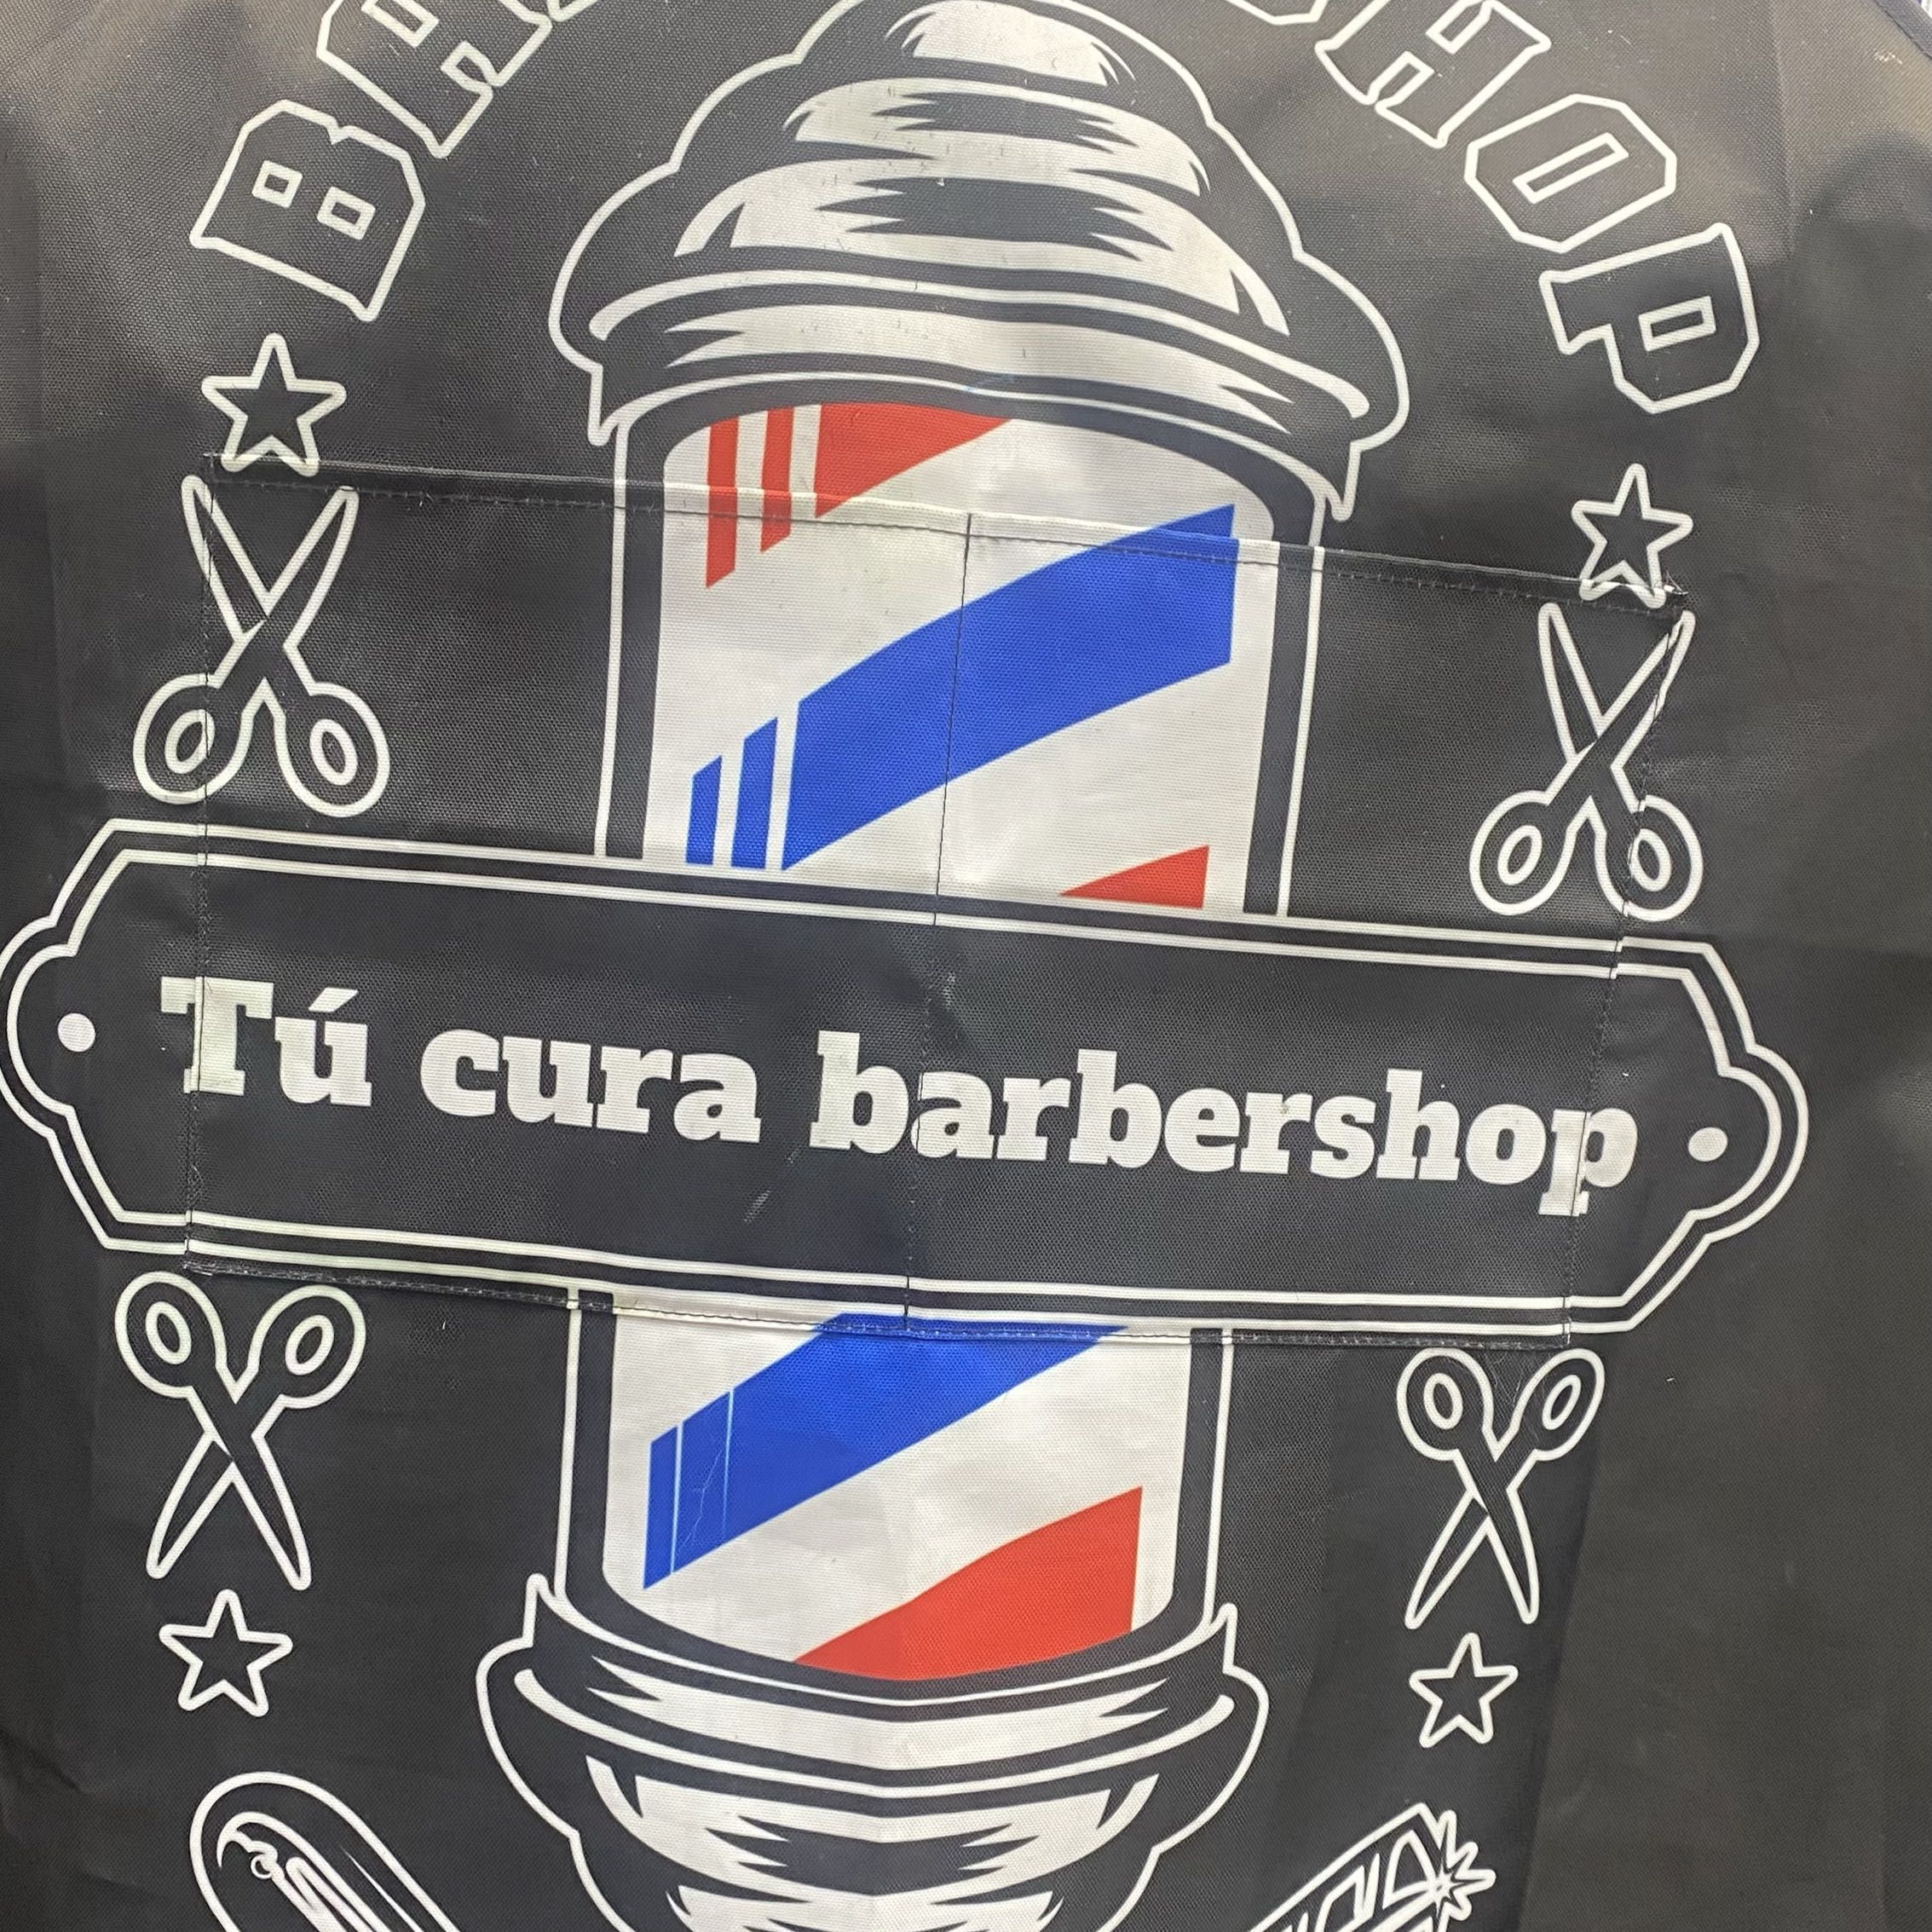 Tu cura barbershop, 1121 New York Ave, Union City, 07087